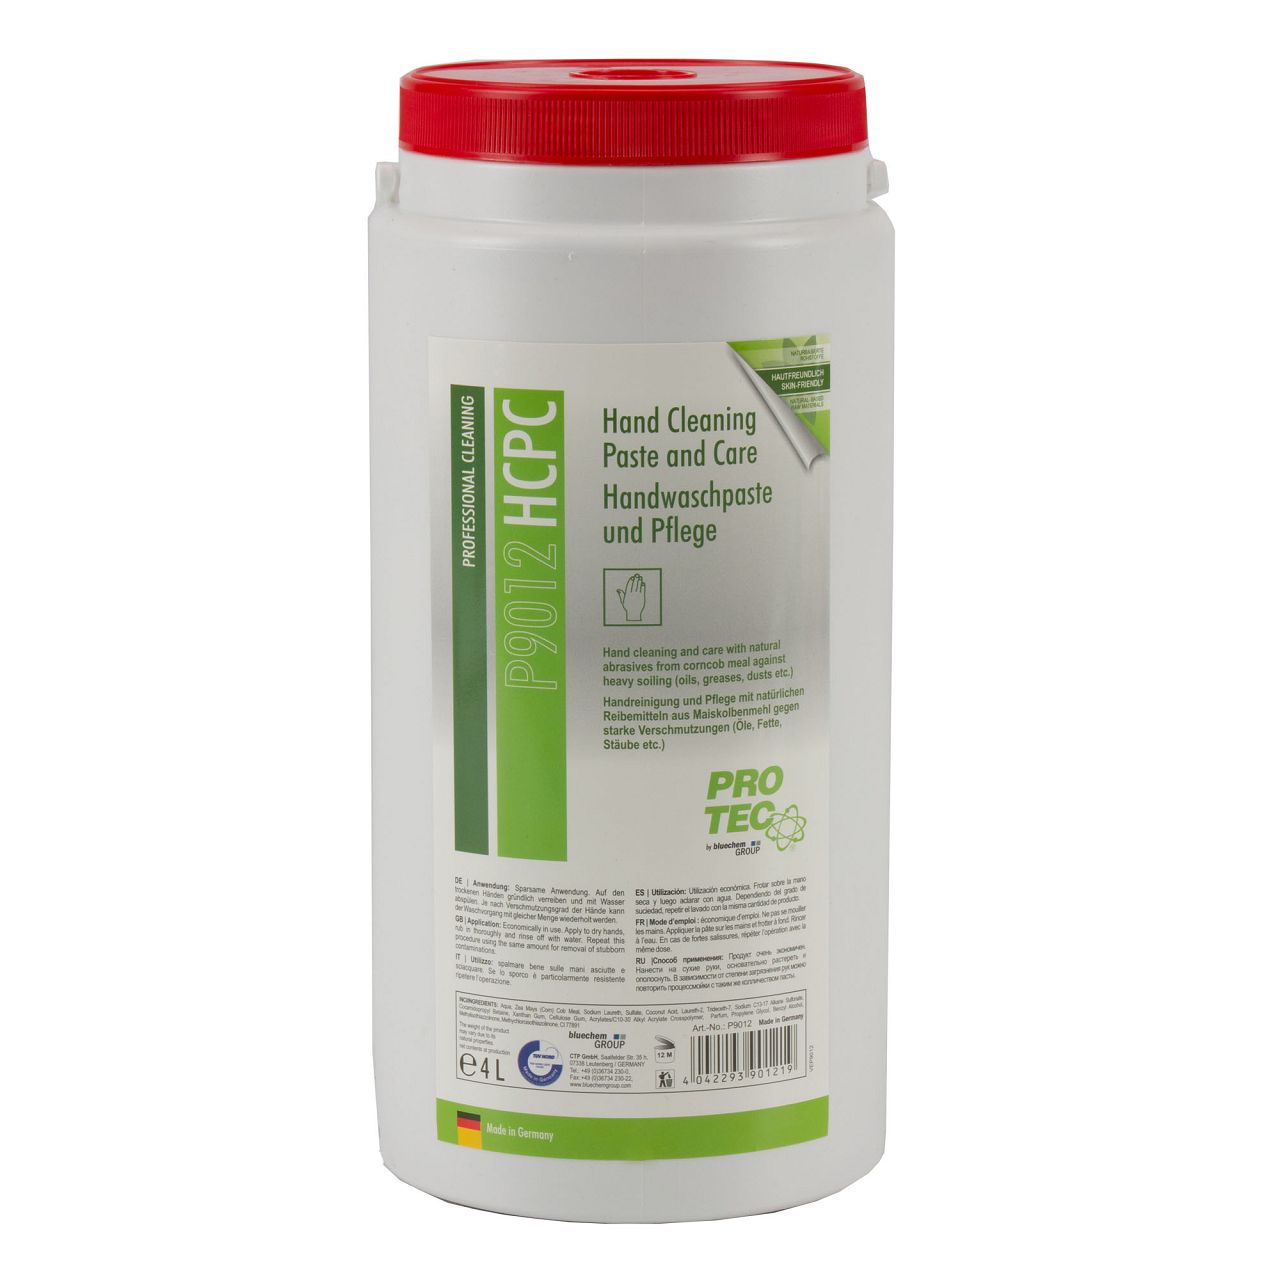 PROTEC P9012 HCPC Hand Cleaning Paste and Care Handwaschpaste und Pflege 4 Liter